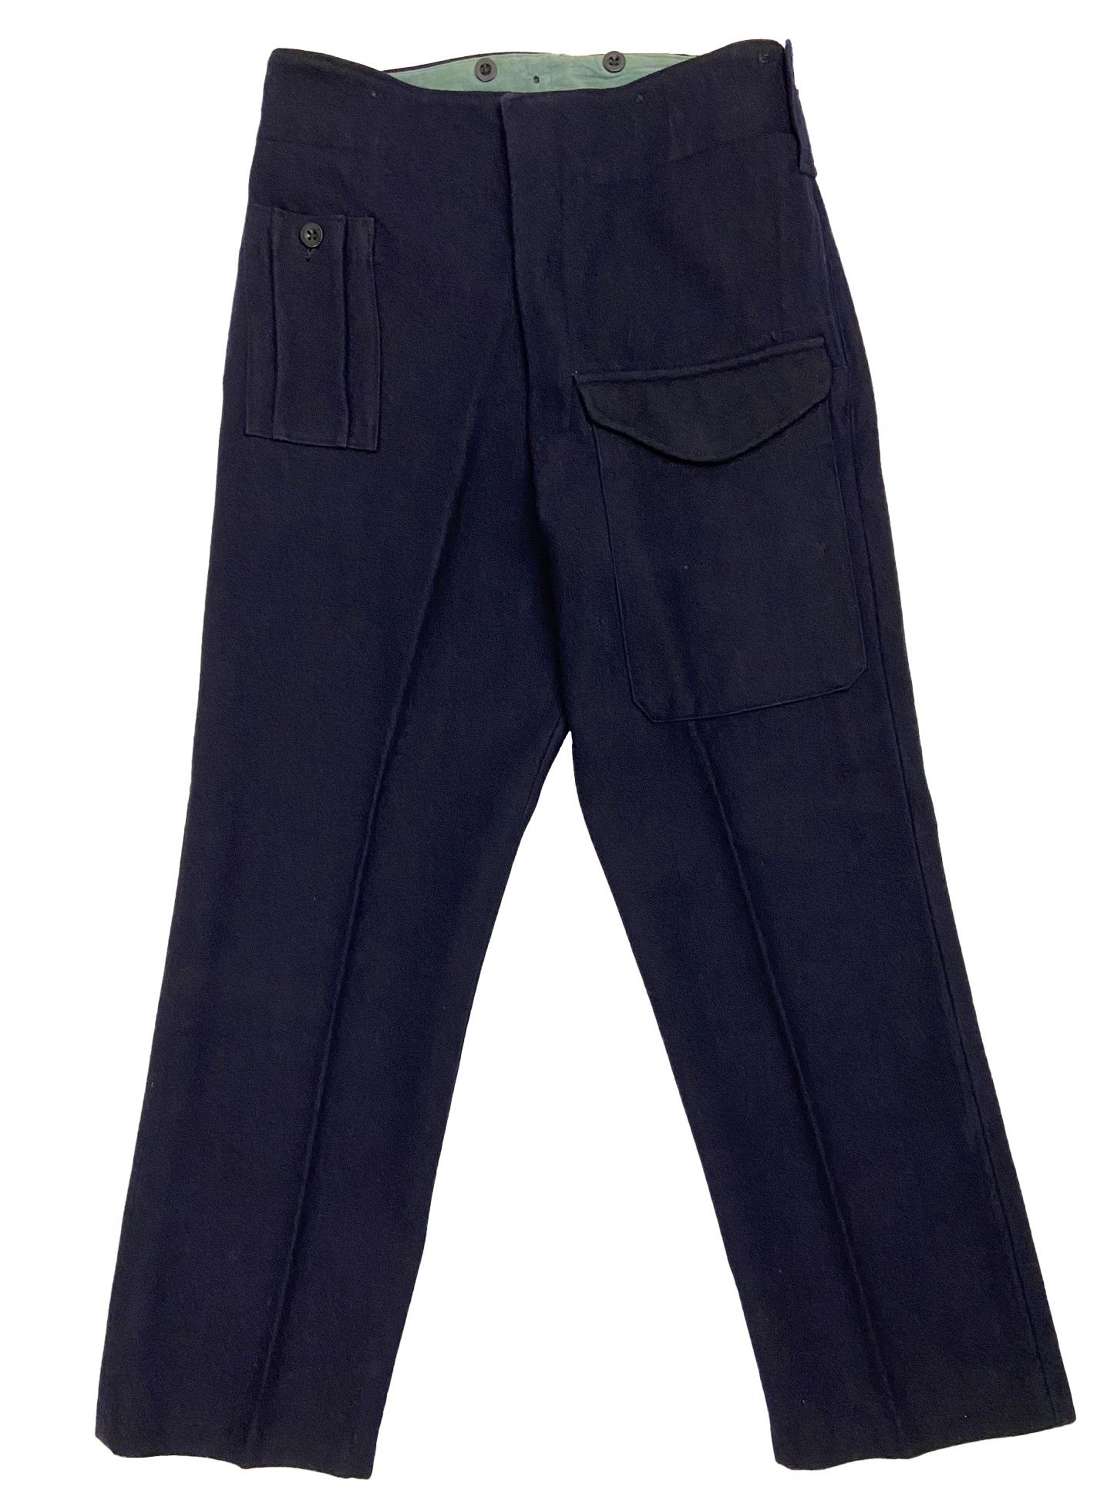 Original Civil Defence Battledress Trousers